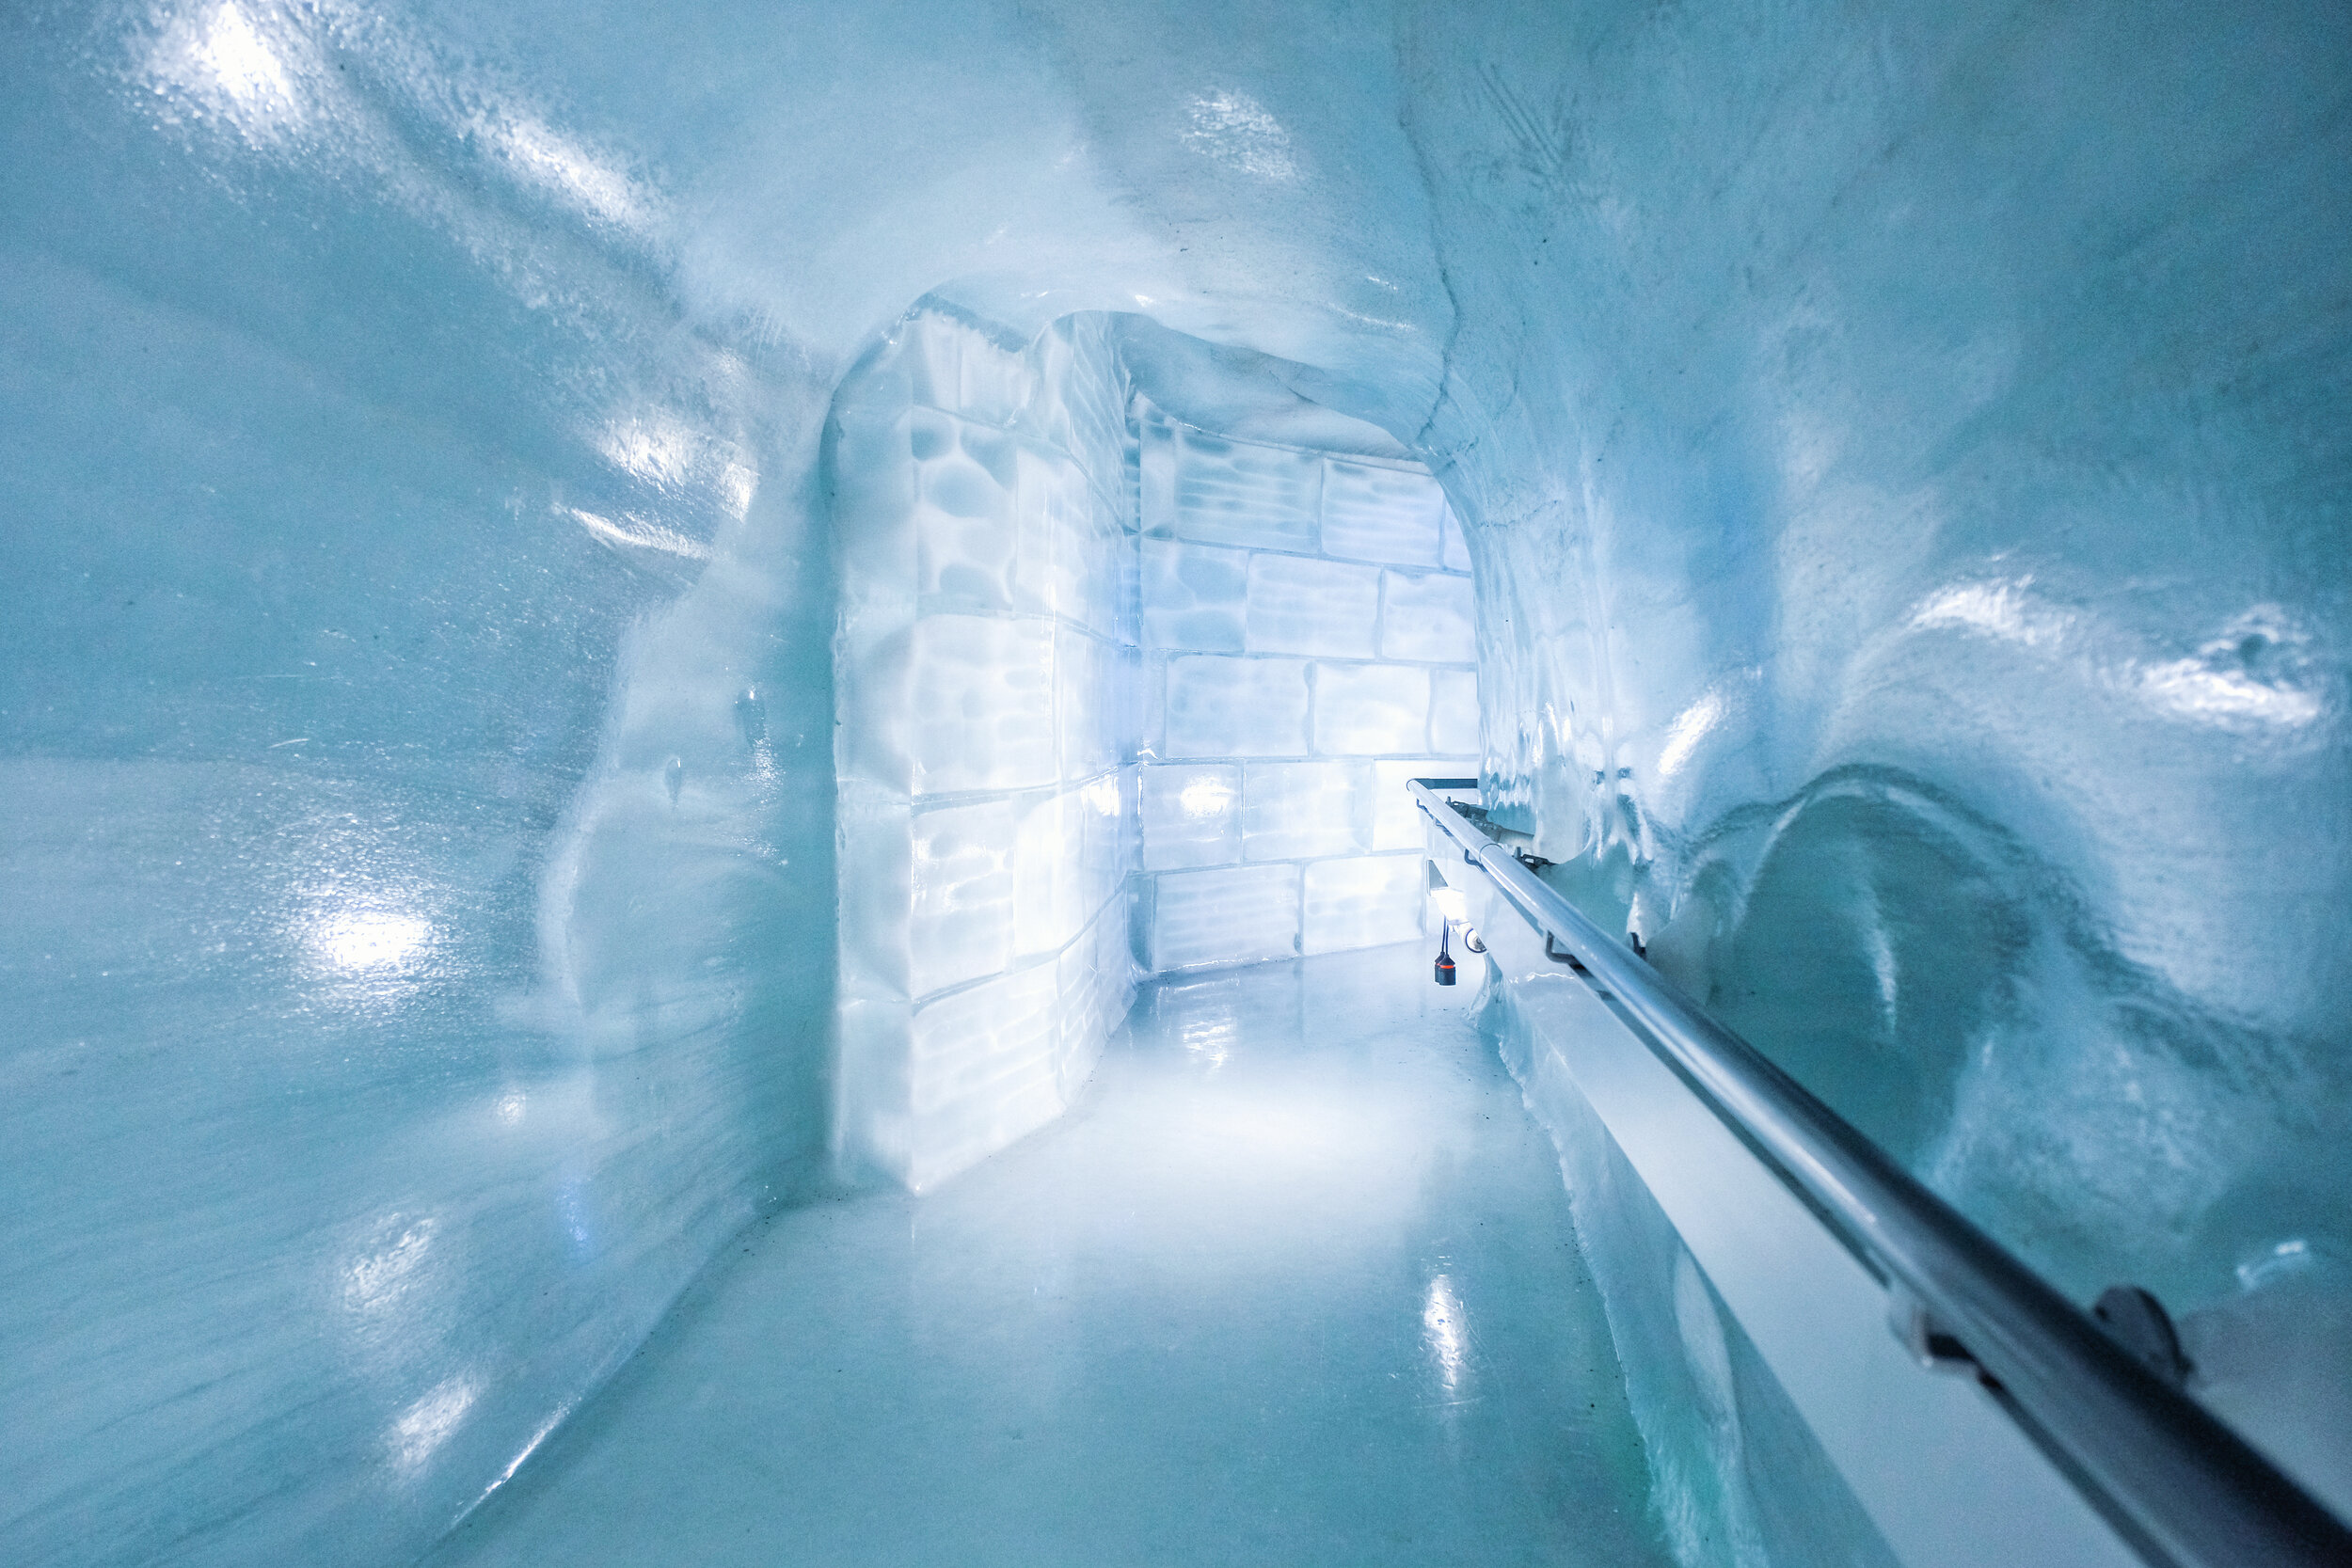 Jungfrau ice palace